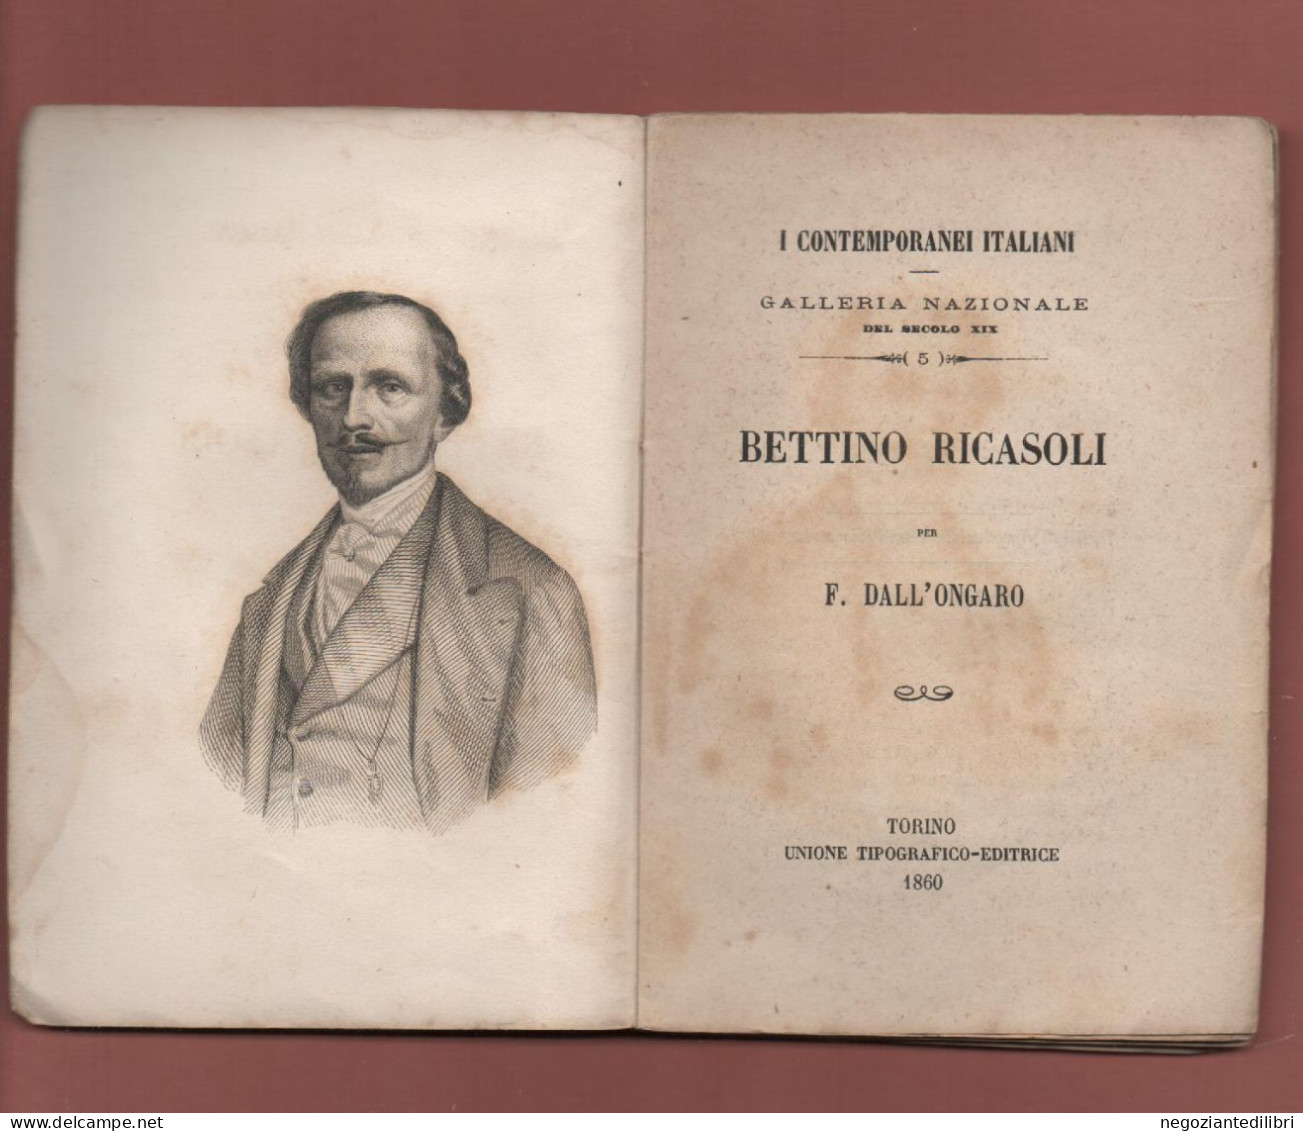 Firenze(I Contemporanei Italiani)+F.Dall'Ongaro BETTINO RICASOLI.-U.Tip.Ed.TORINO 1860 - Old Books